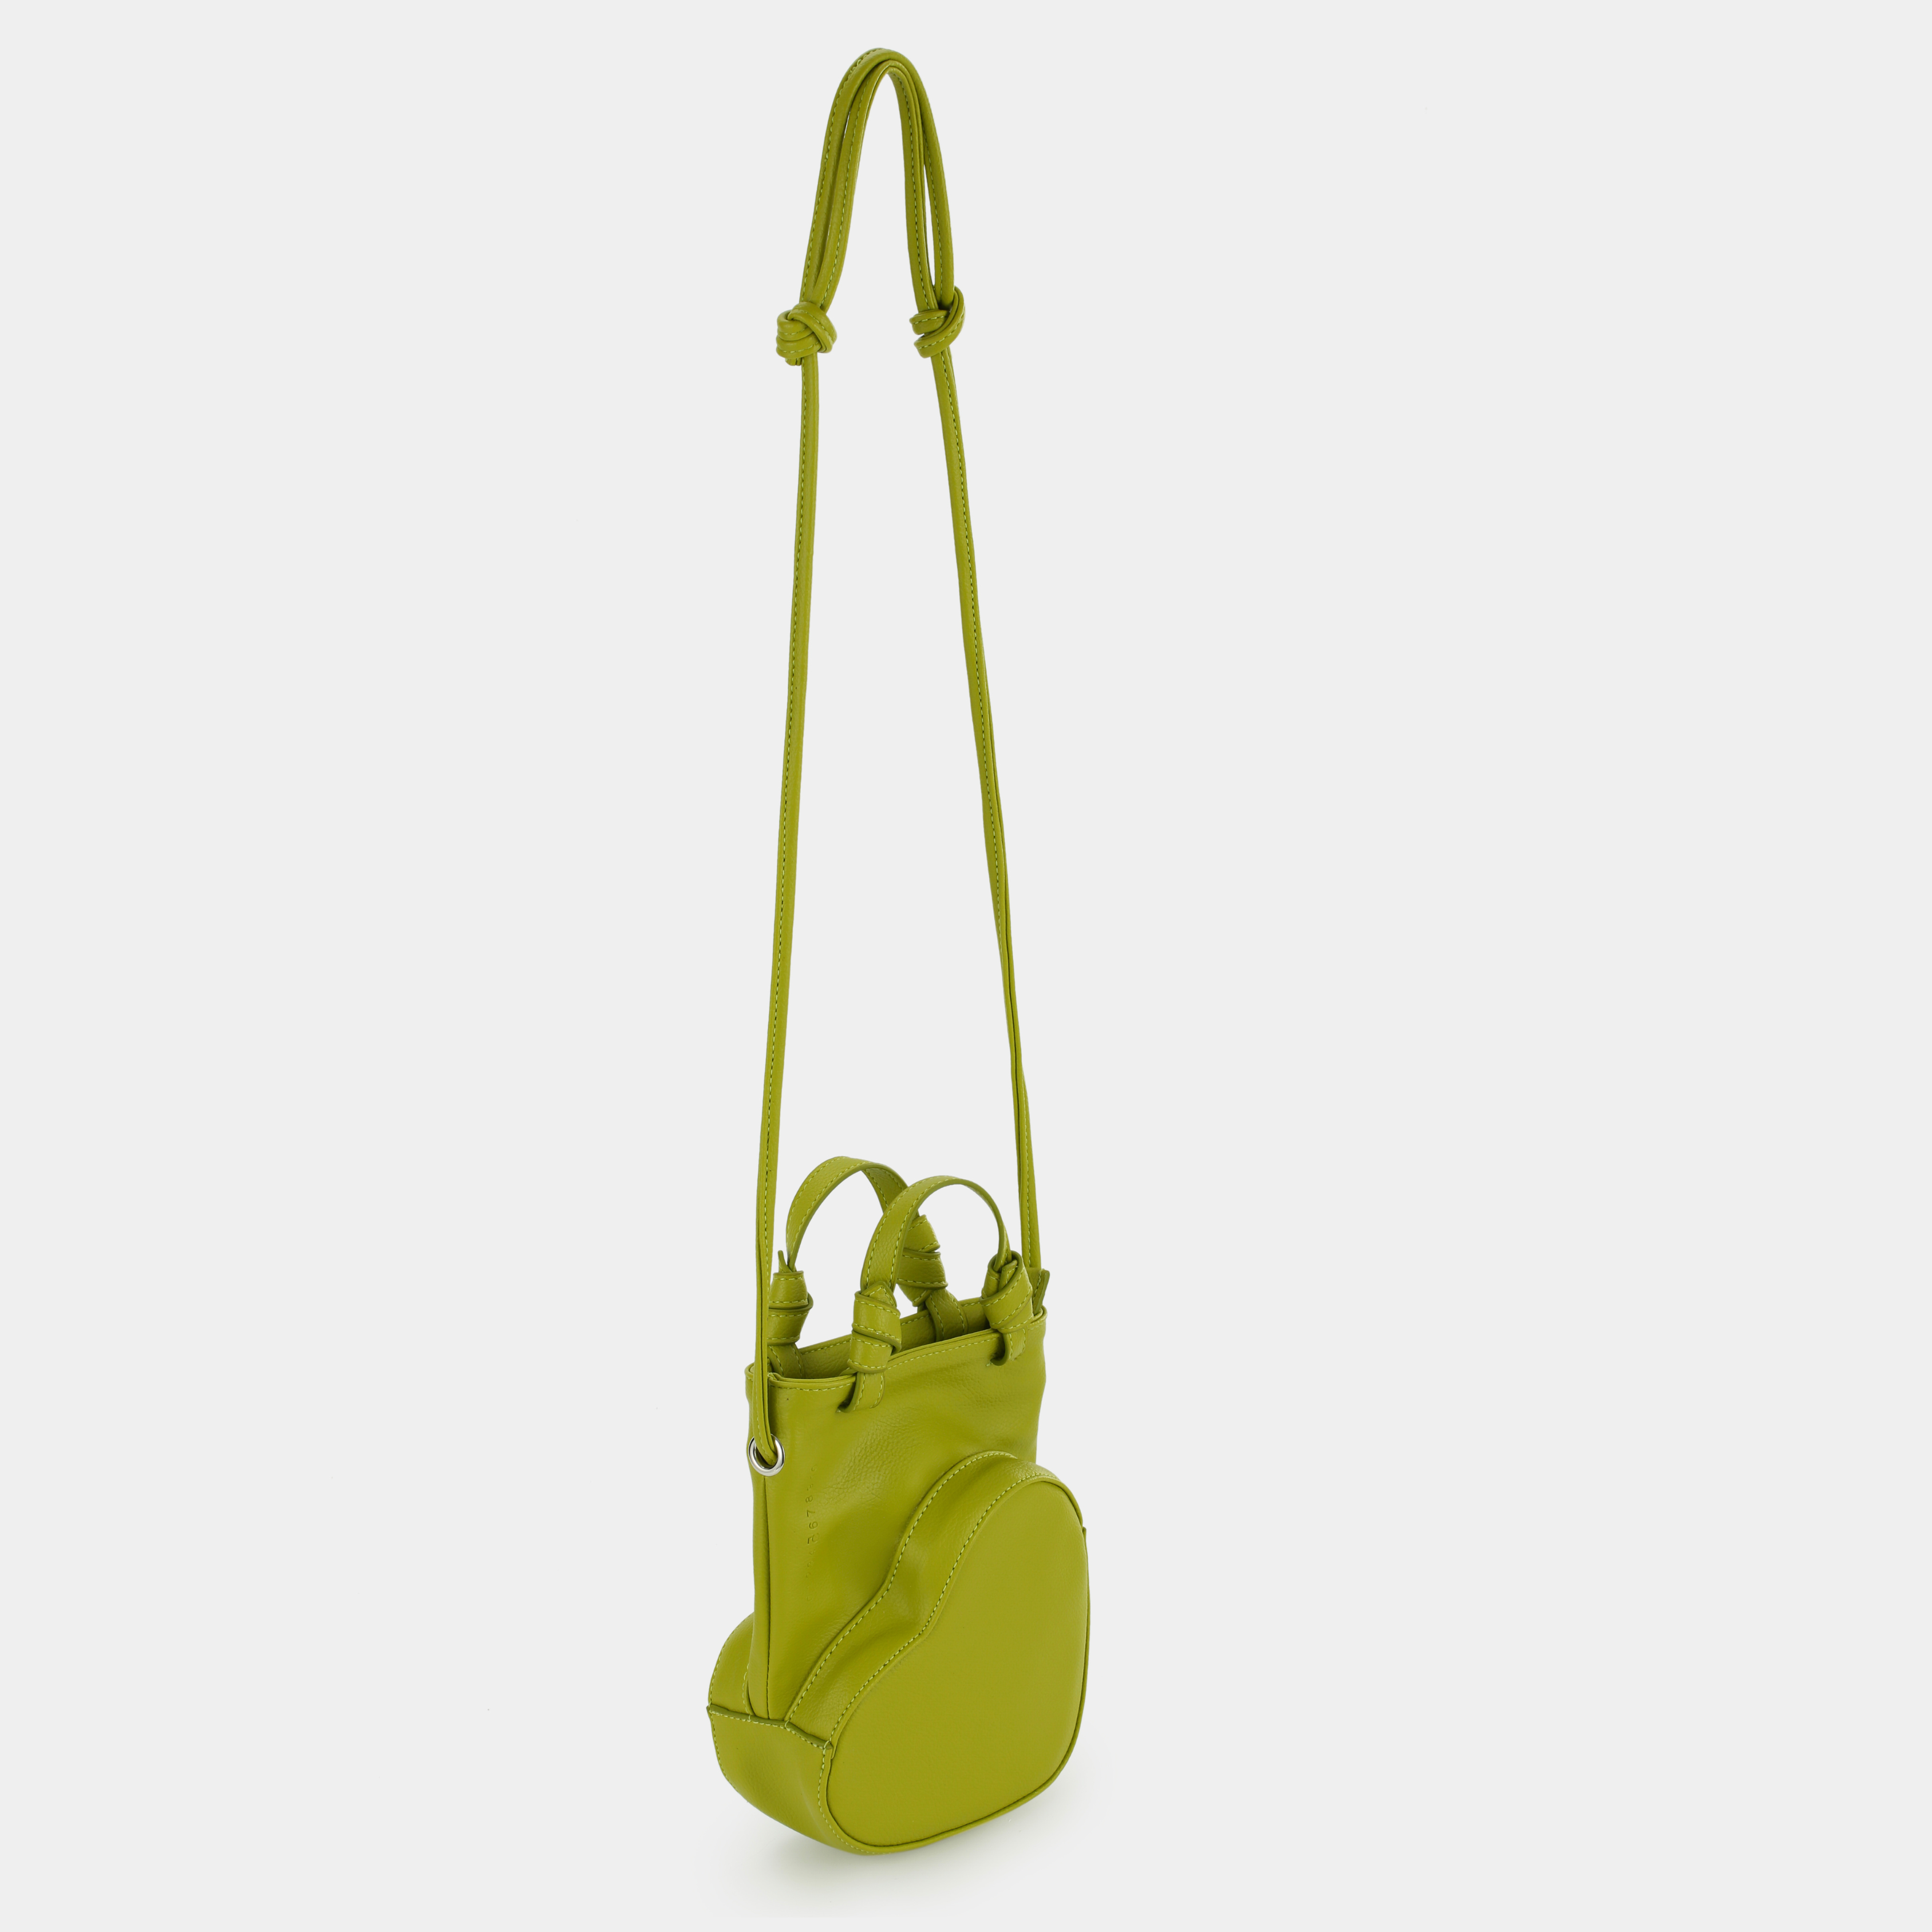 Growing Heart handbag in avocado green